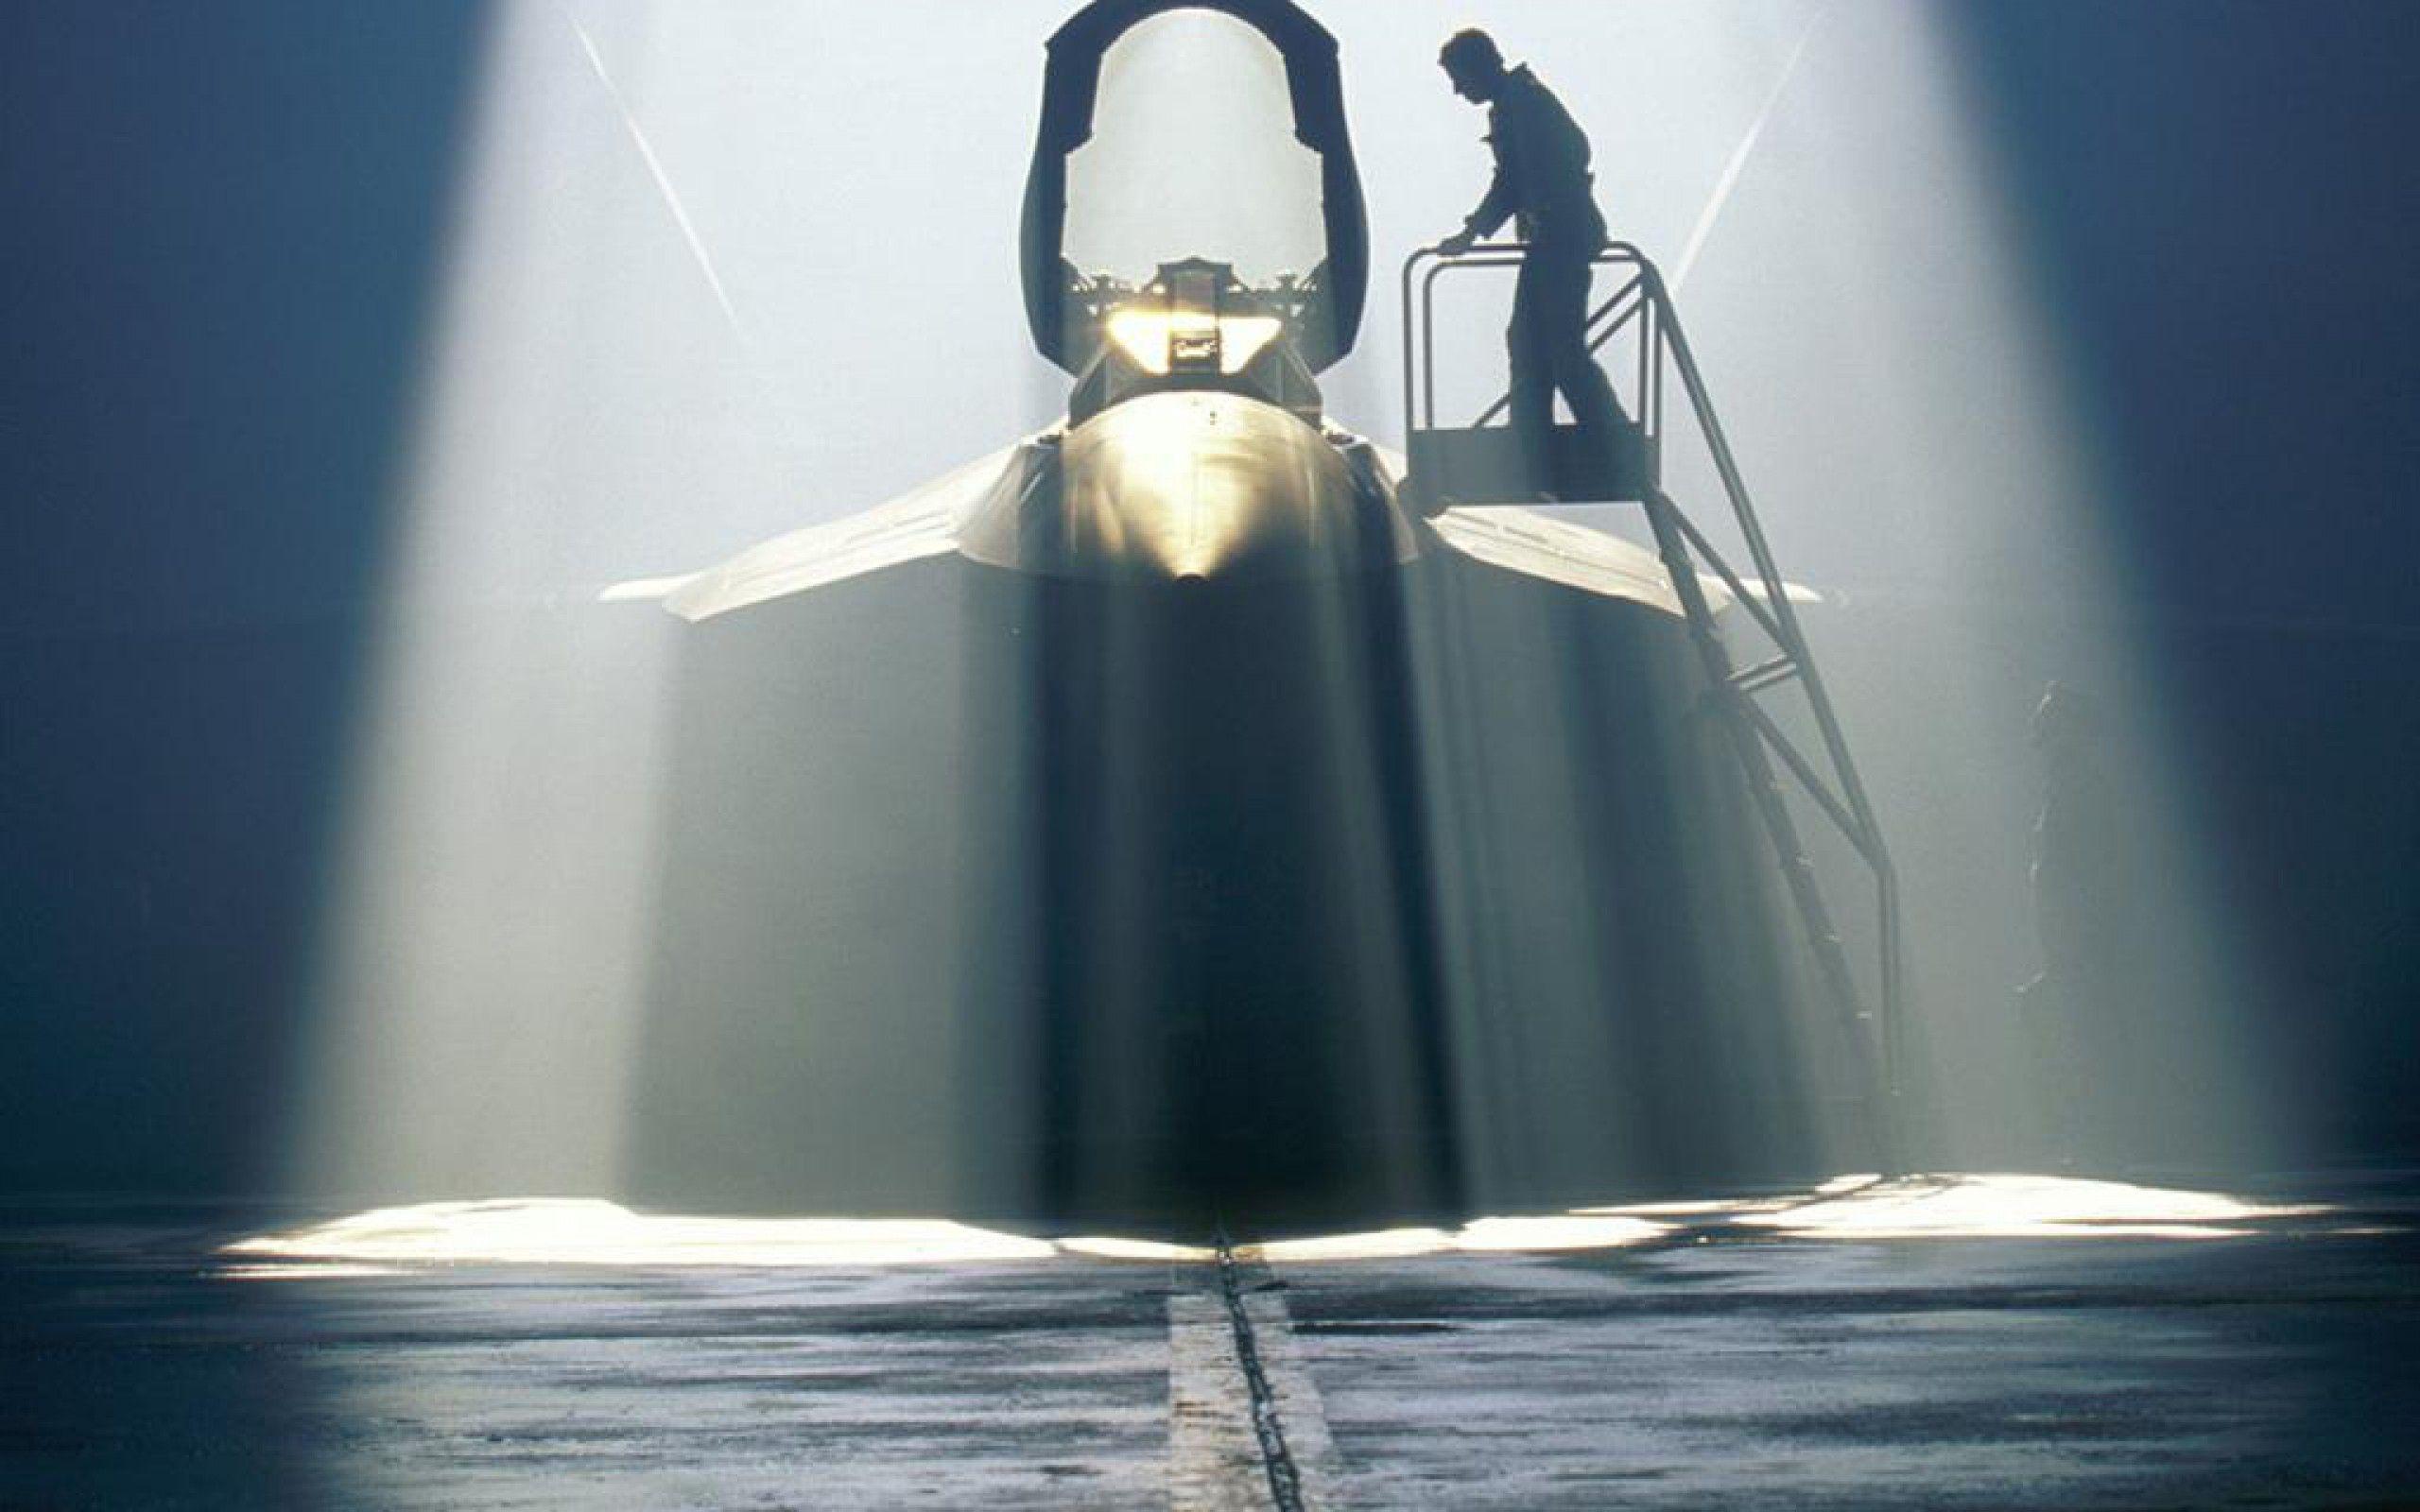 Lockheed Martin F 22 Raptor HD Wallpaper. Background